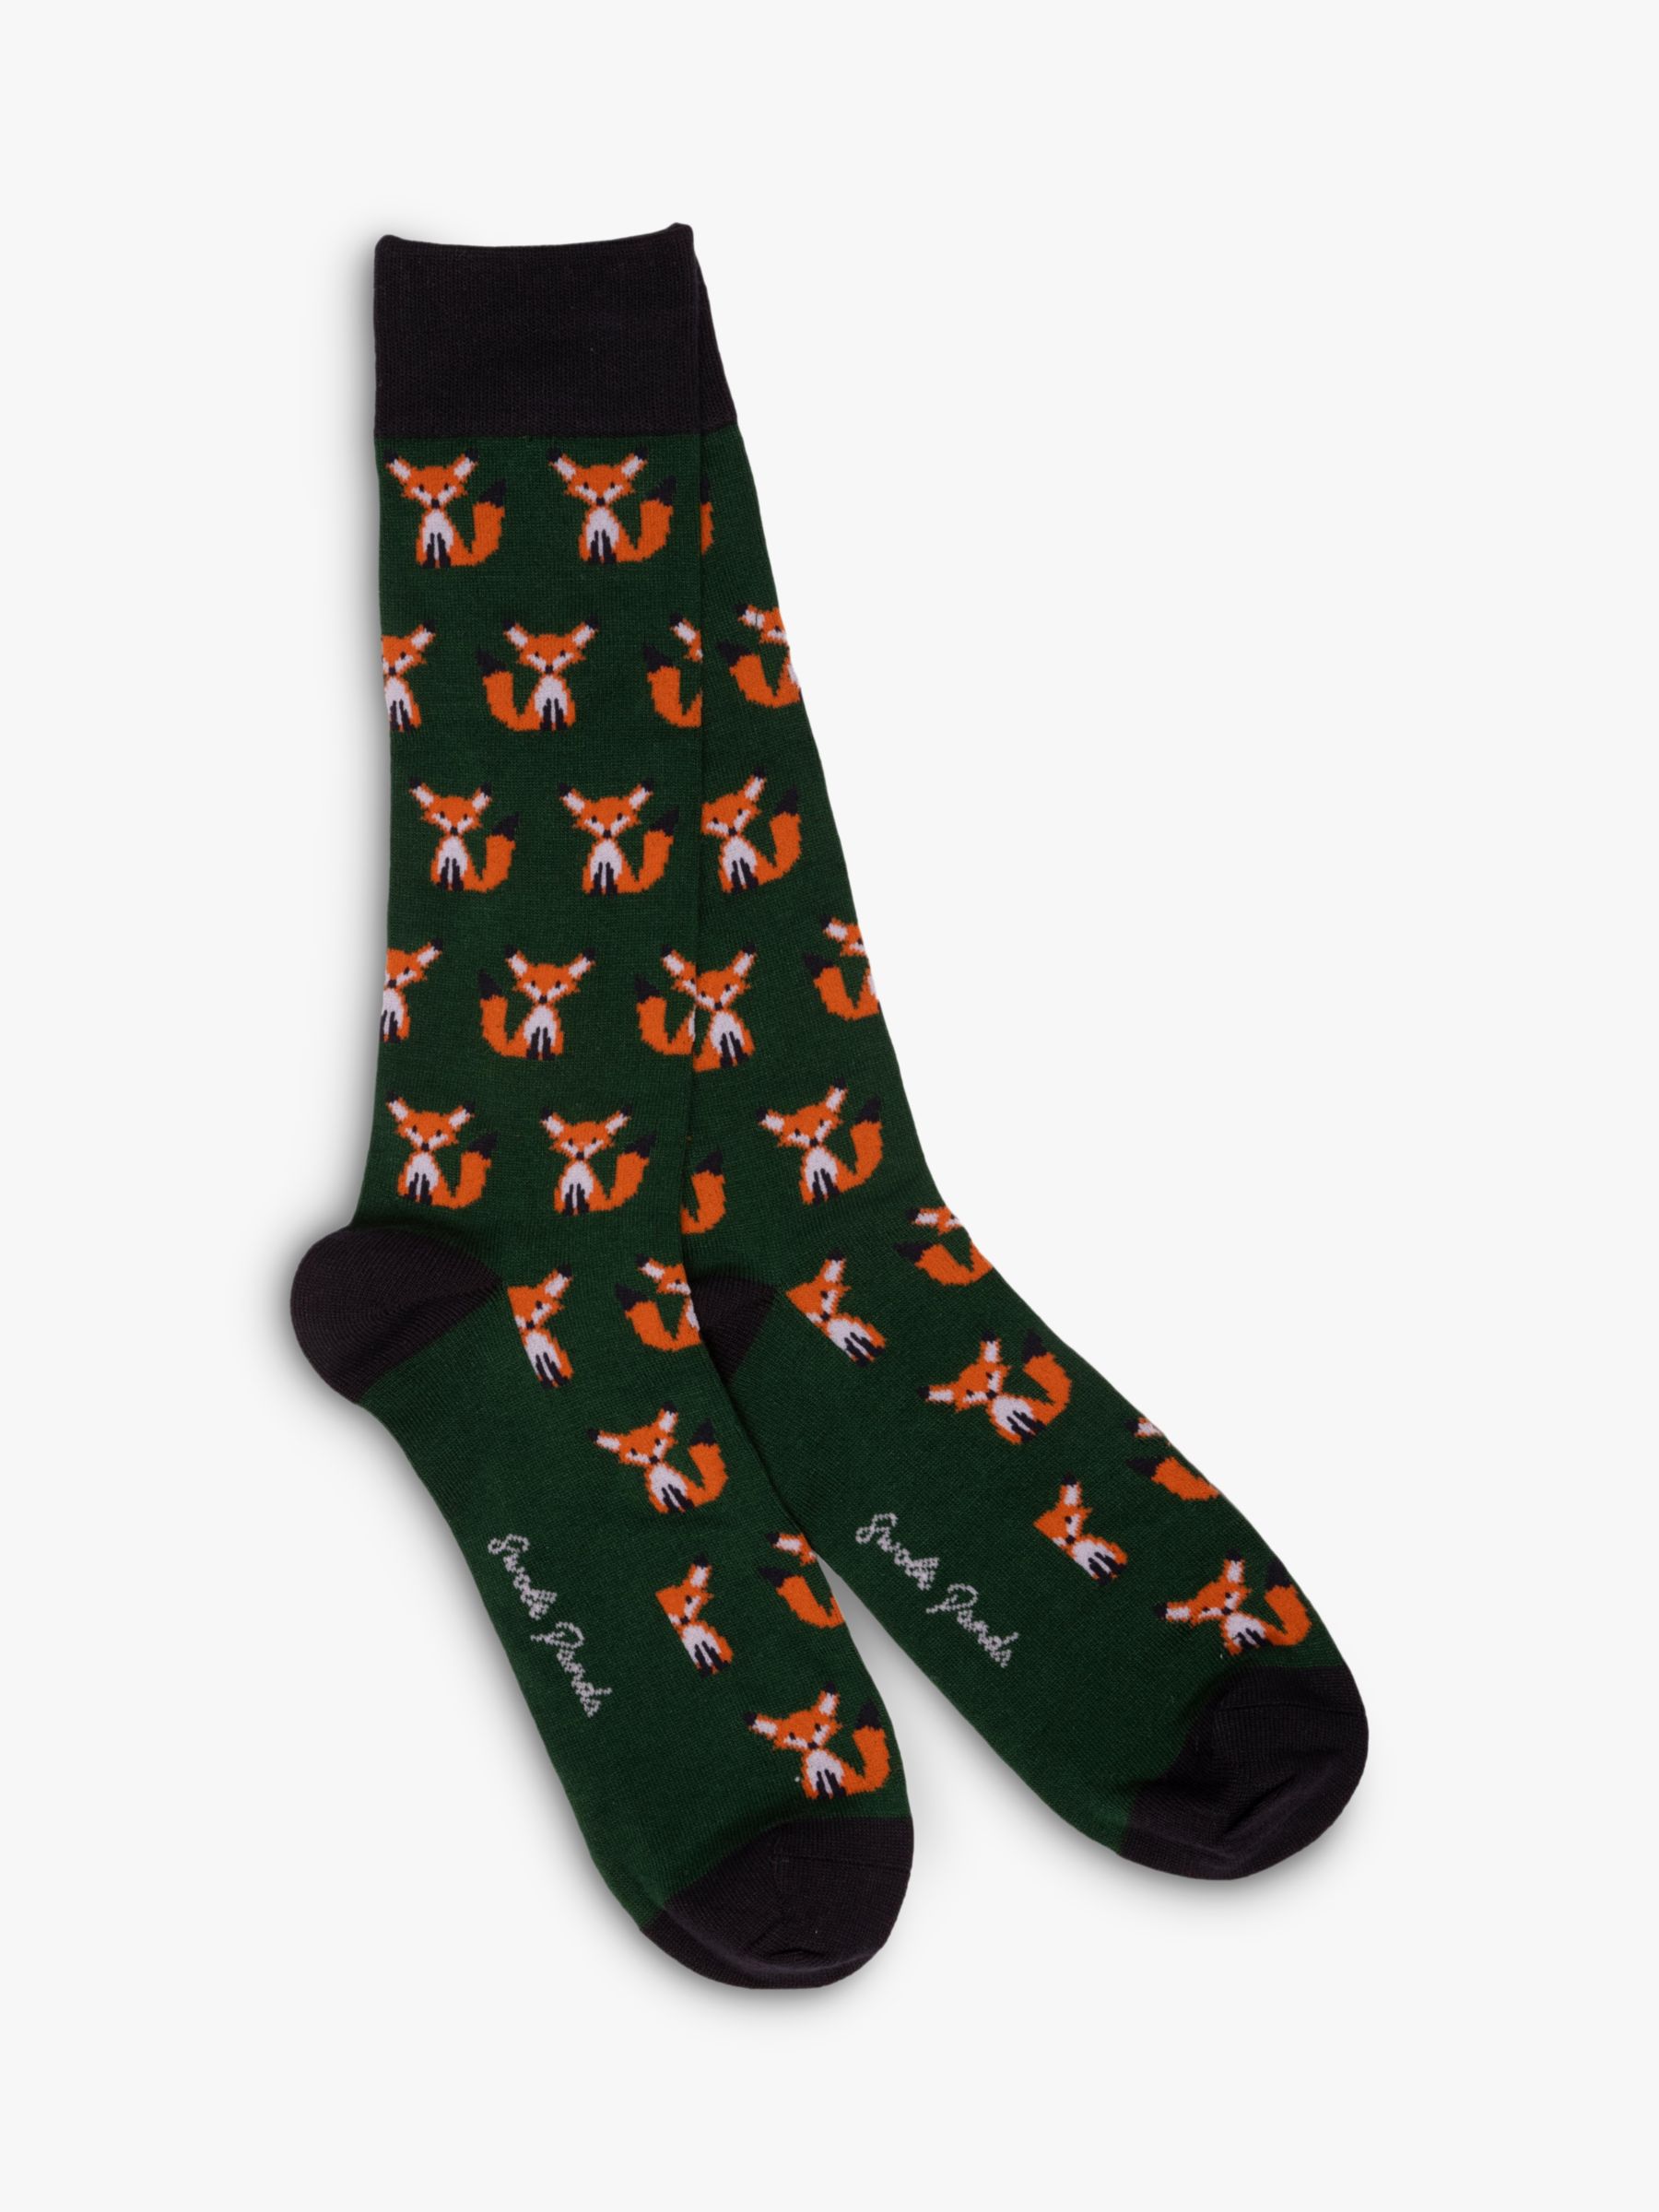 Swole Panda Fox & Pheasant Bamboo Socks, Pack of 4, Multi, 7-11